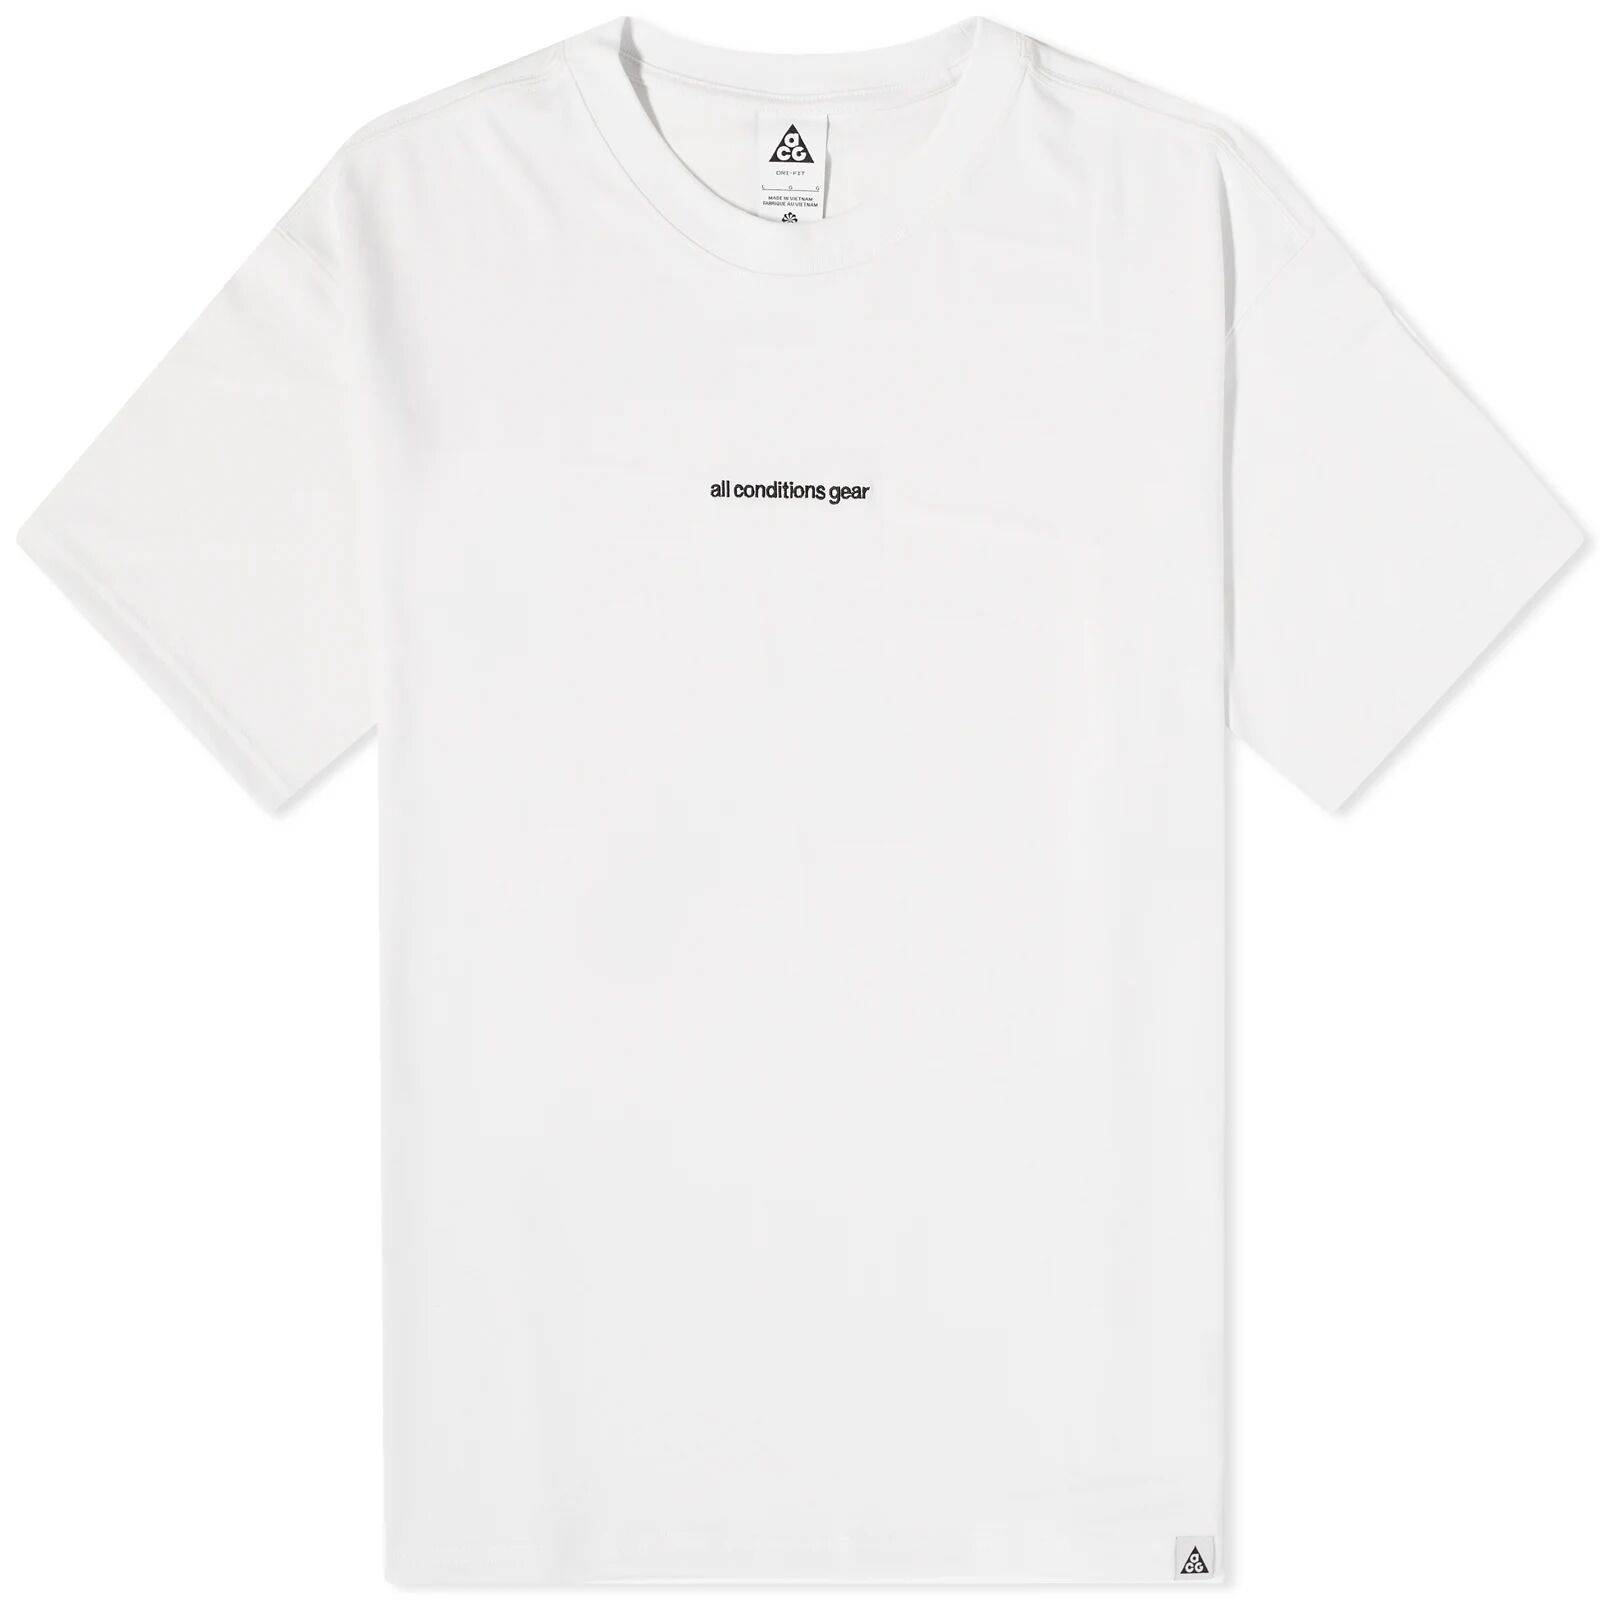 Nike Men's ACG T-Shirt in Summit White, Size Medium